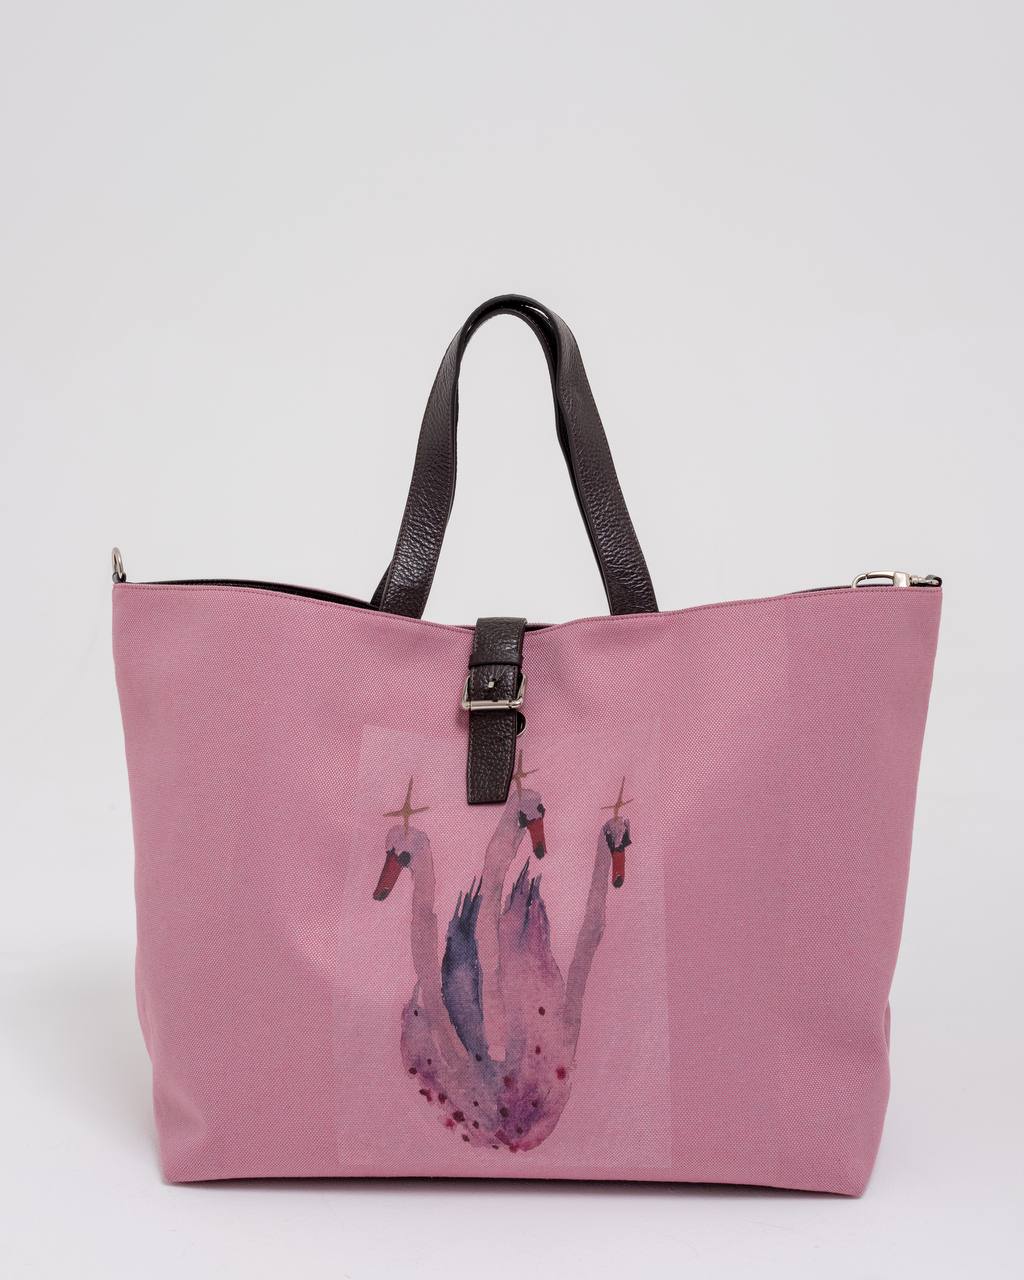 Artist’s Bag Pink